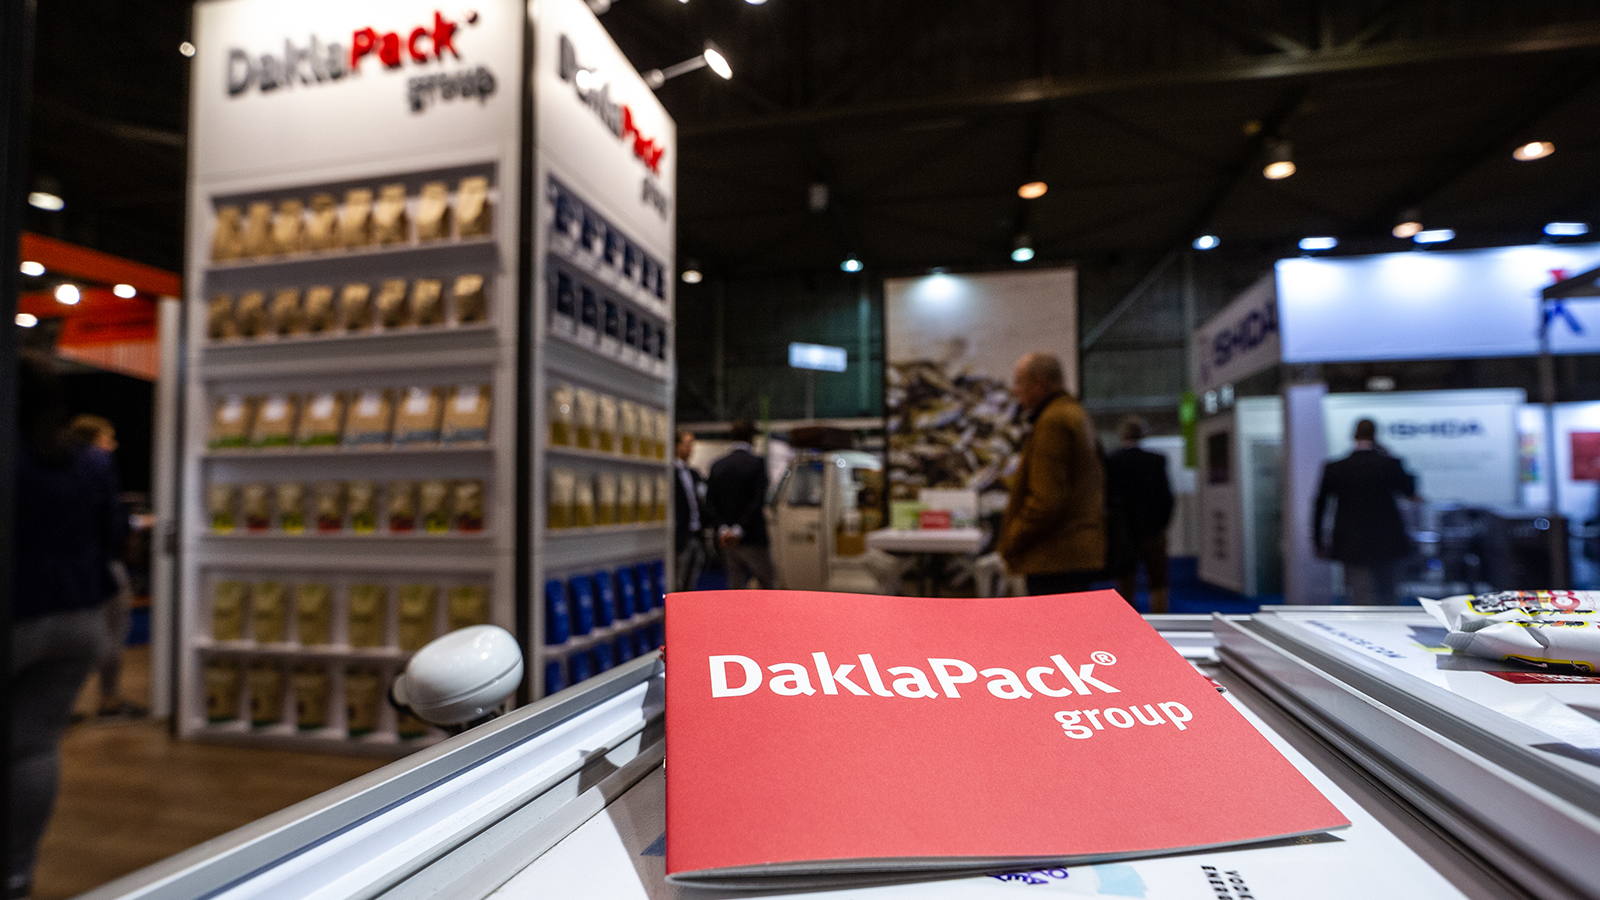 DaklaPack